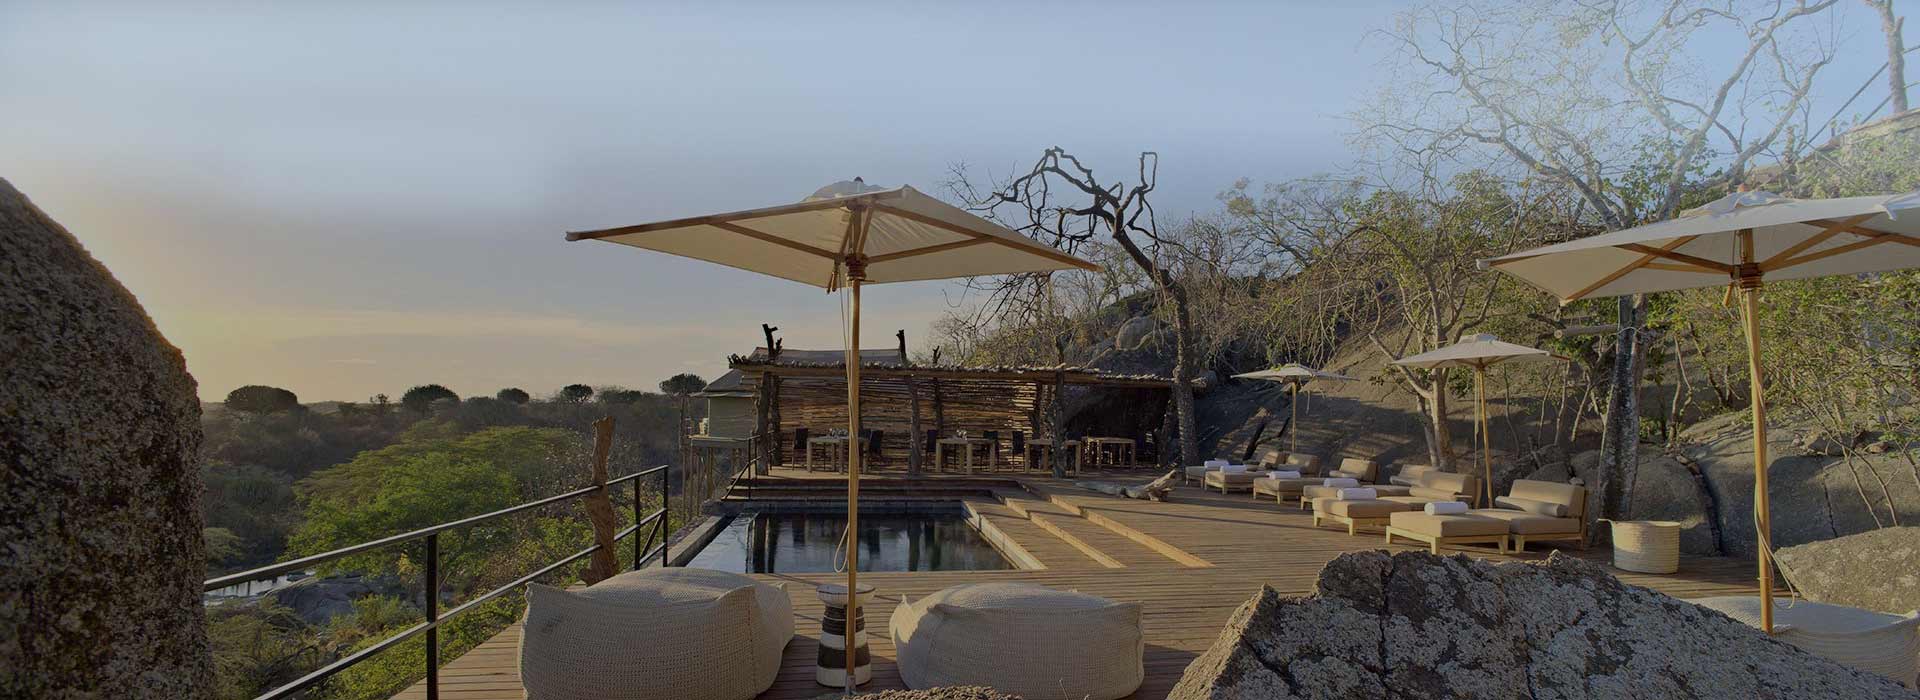 Tanzania Lodge Safari (Mwanza-Arusha) 